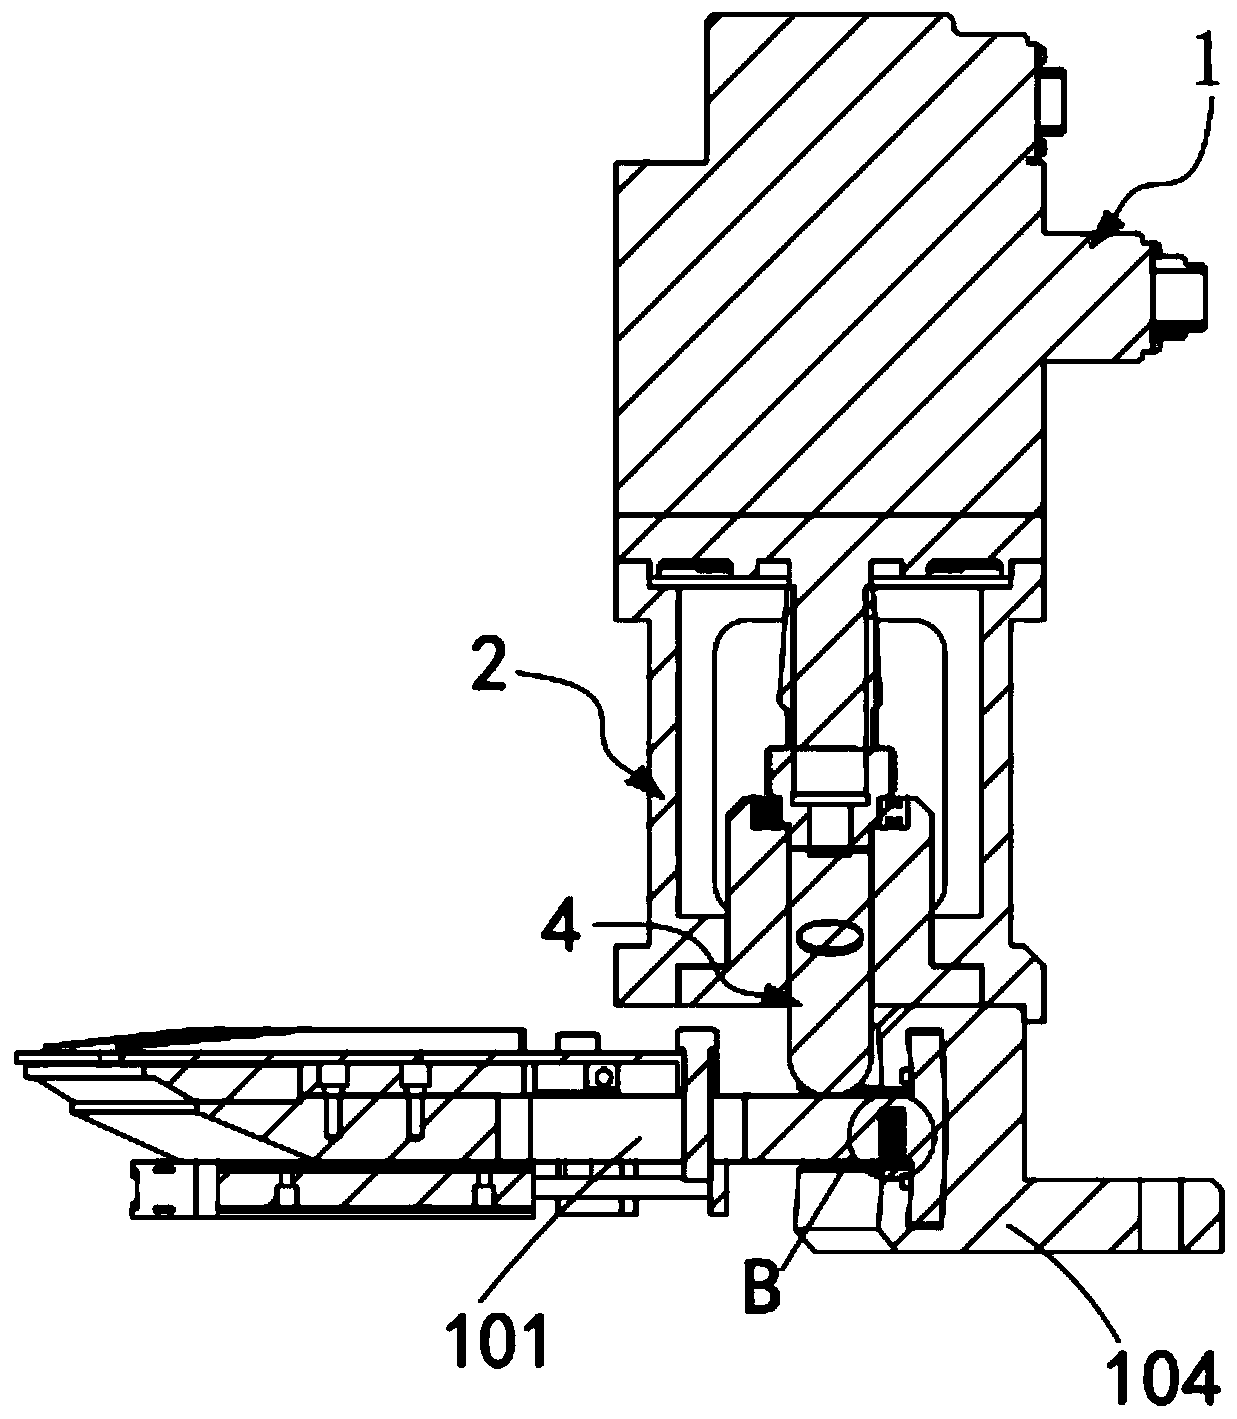 Ultrafine equipment oscillation mechanism